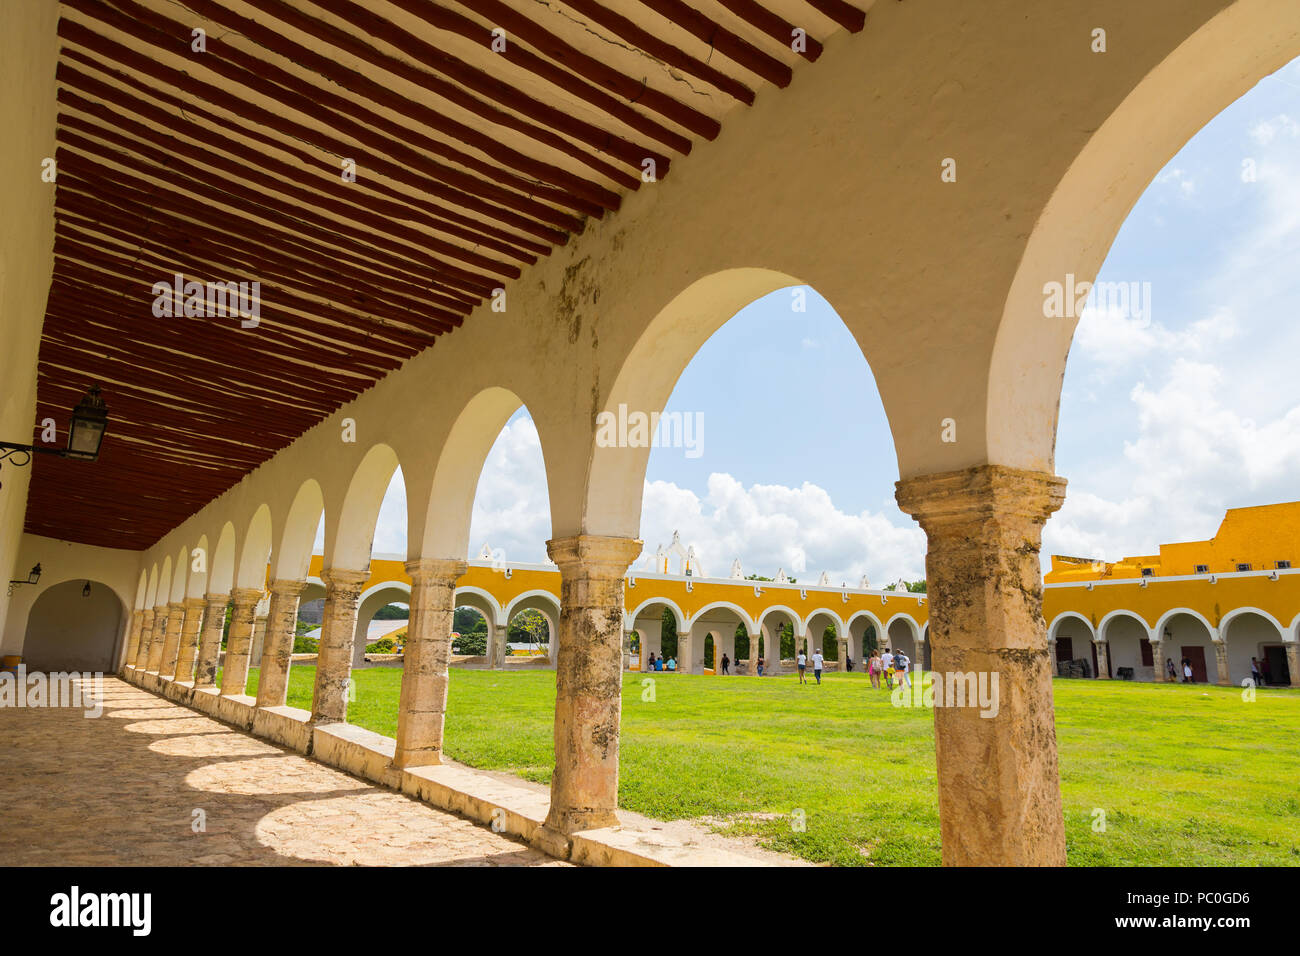 Arcades of the San Antonio de Padua convent in 'magical town' Izamal Yucatan Mexico. Stock Photo